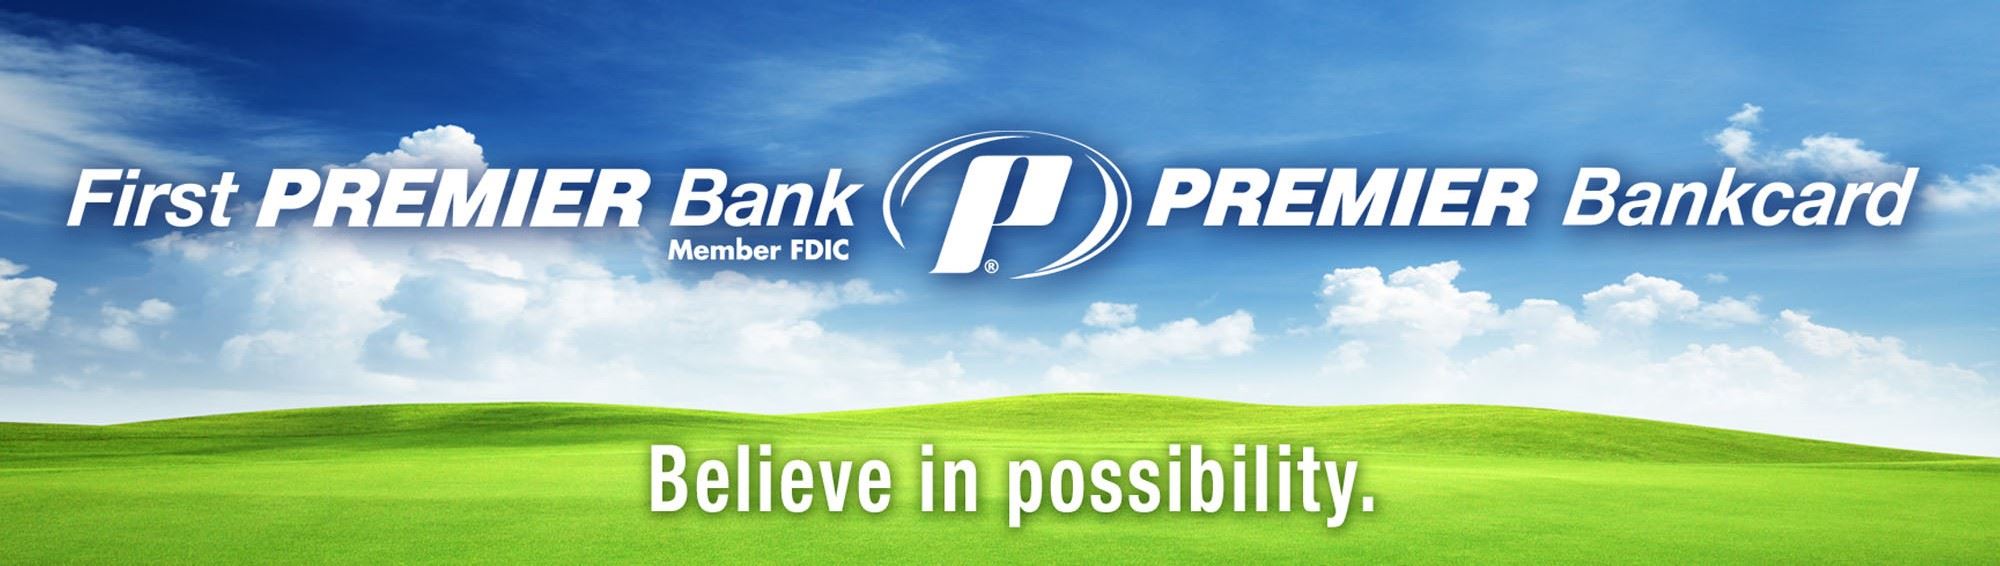 First PREMIER Bank & PREMIER Bankcard